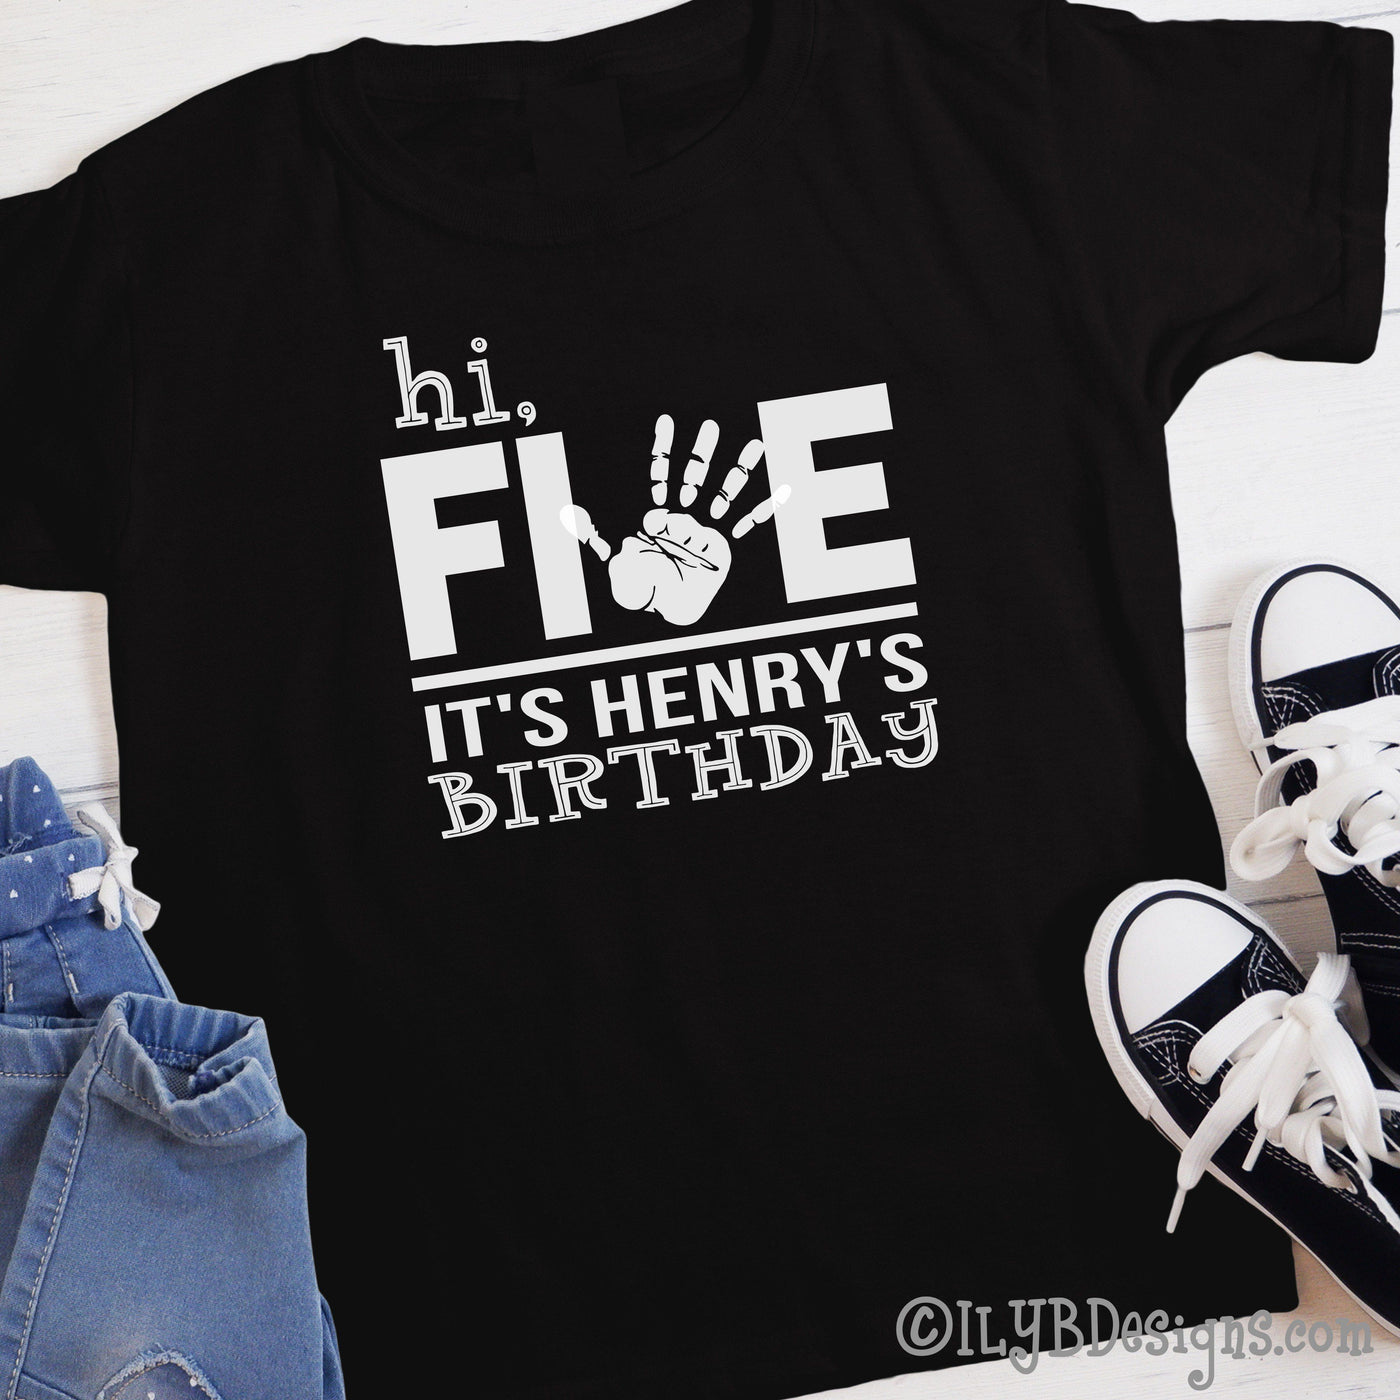 5th Birthday Shirt - Hi Five Birthday Shirt Personalized with Child's Name - ILYB Designs